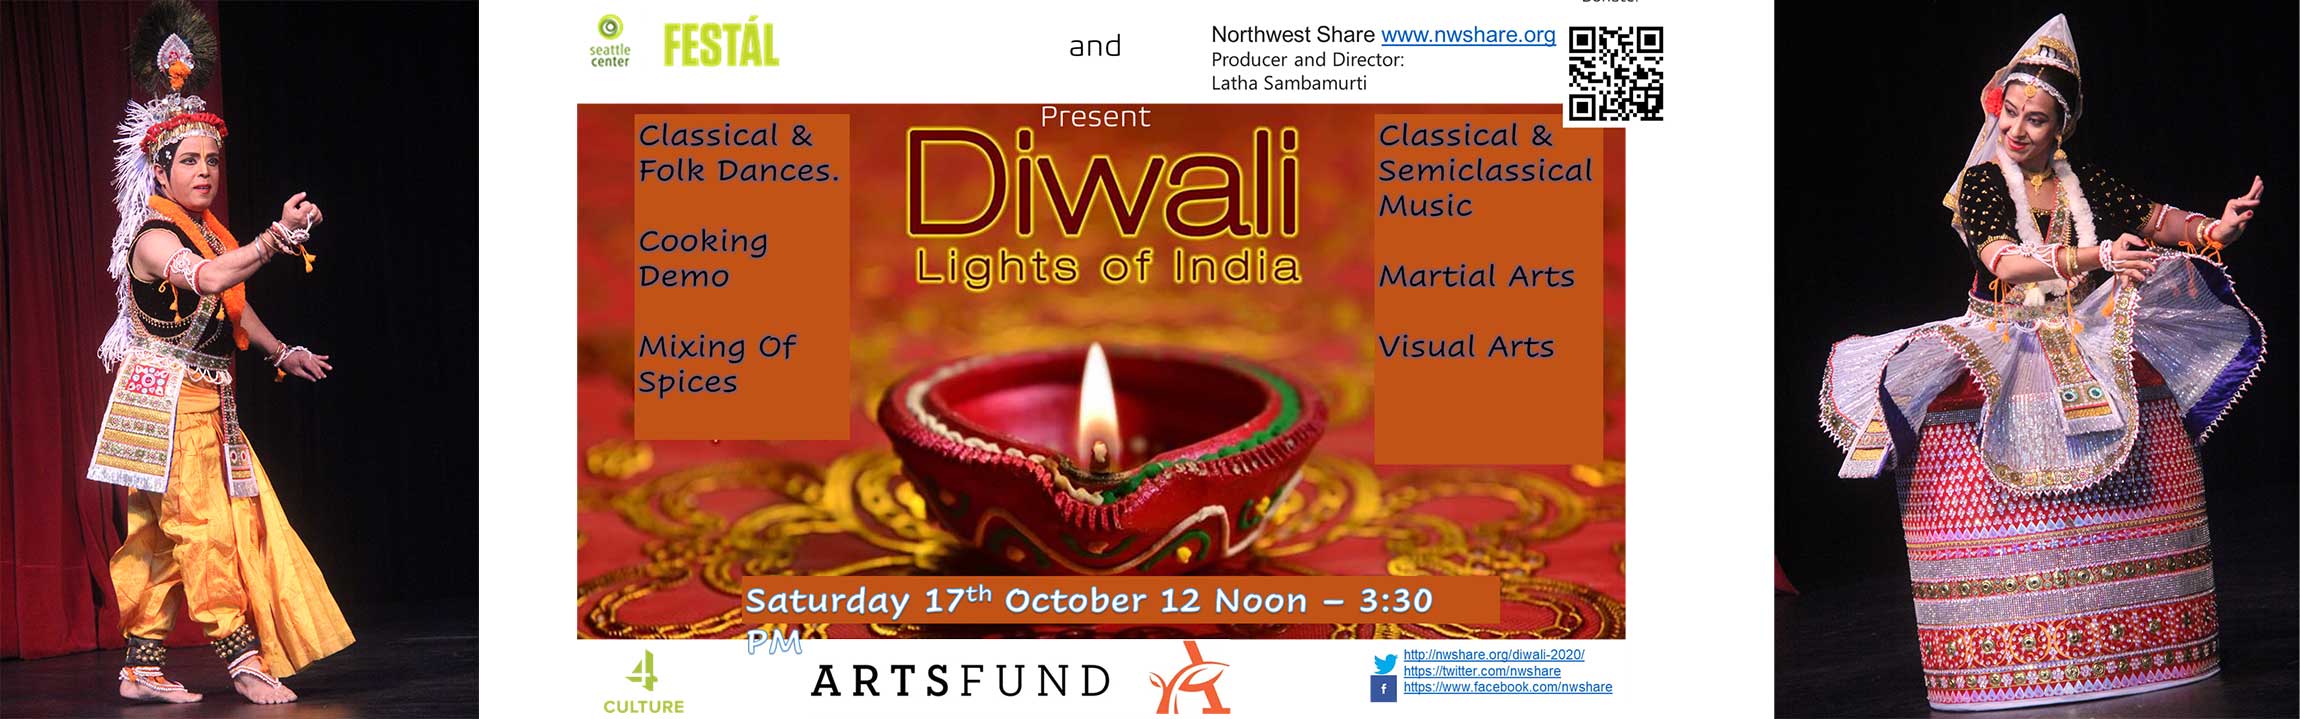 //www.nwshare.org/wp-content/uploads/2020/09/Diwali20201.jpg